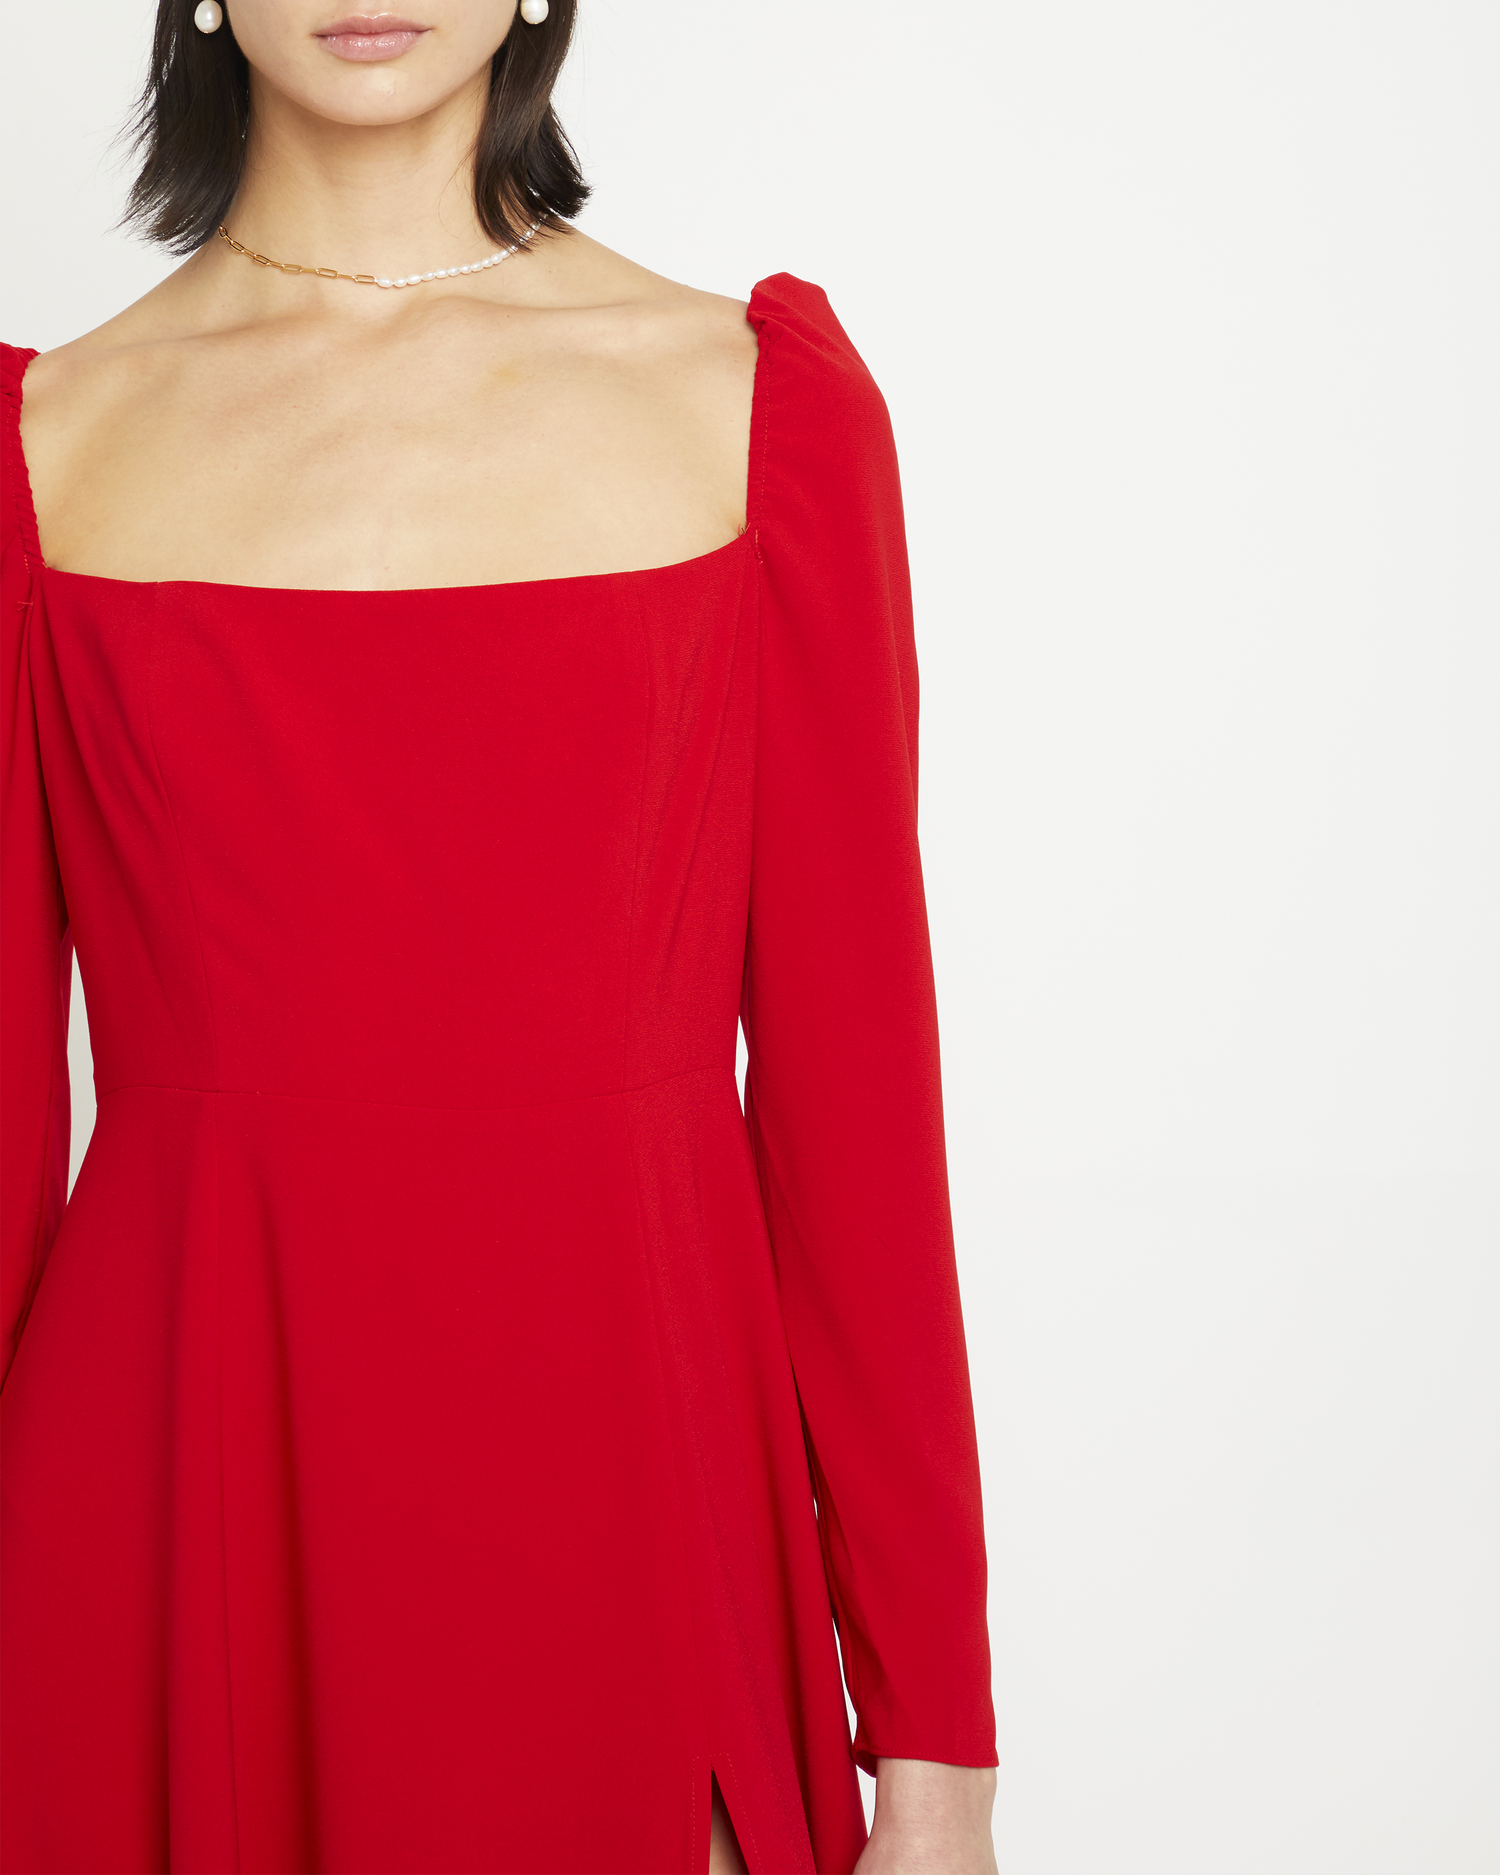 Fourth image of Lenon Dress, a red midi dress, side skirt slit, long sleeves, square neckline